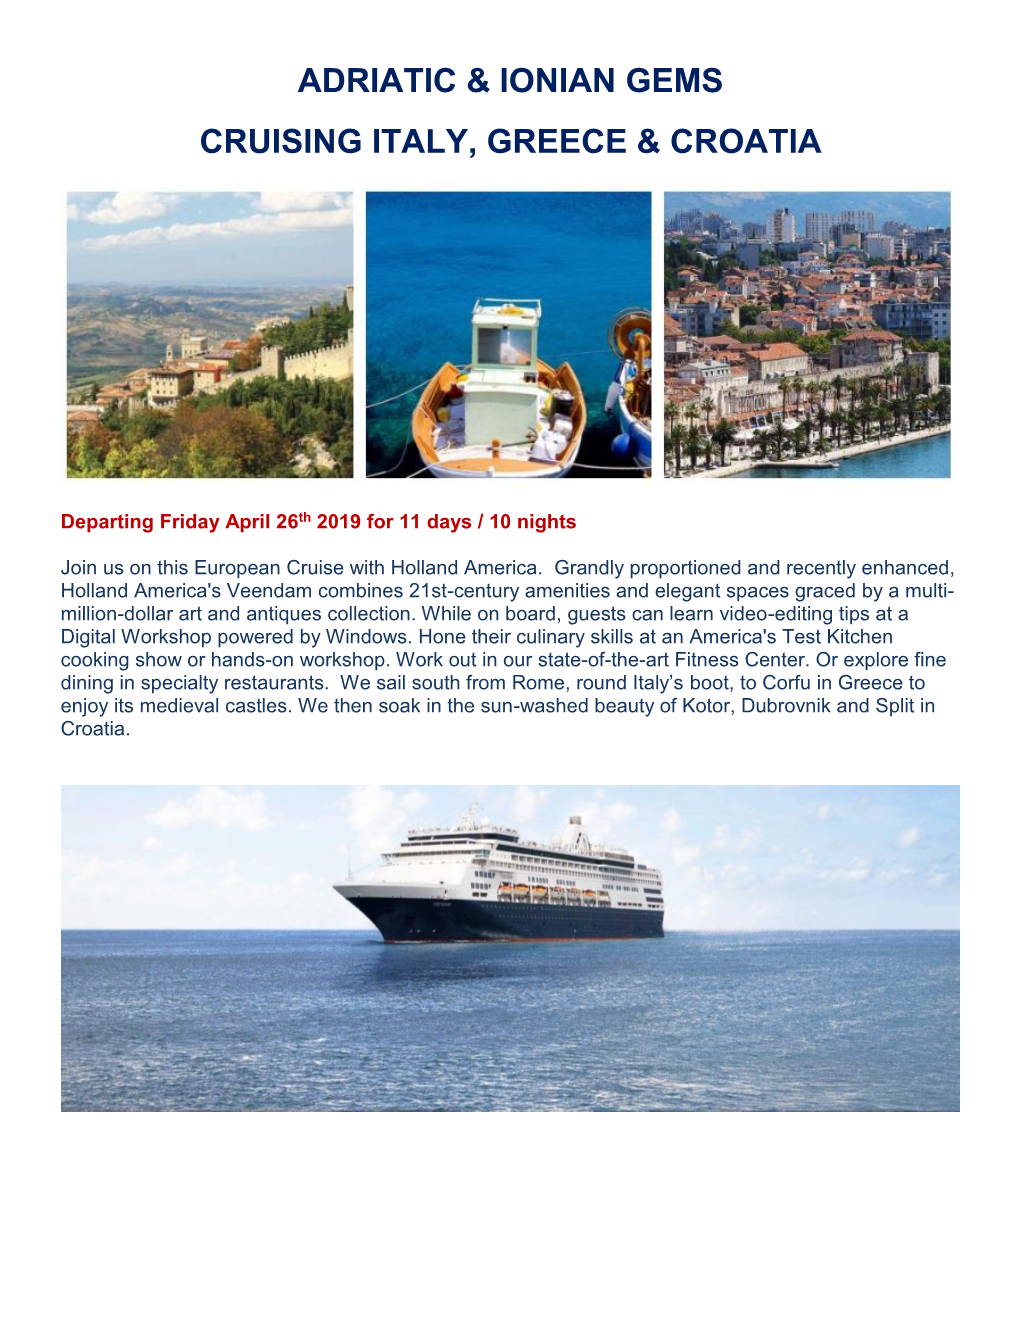 Adriatic & Ionian Gems Cruising Italy, Greece